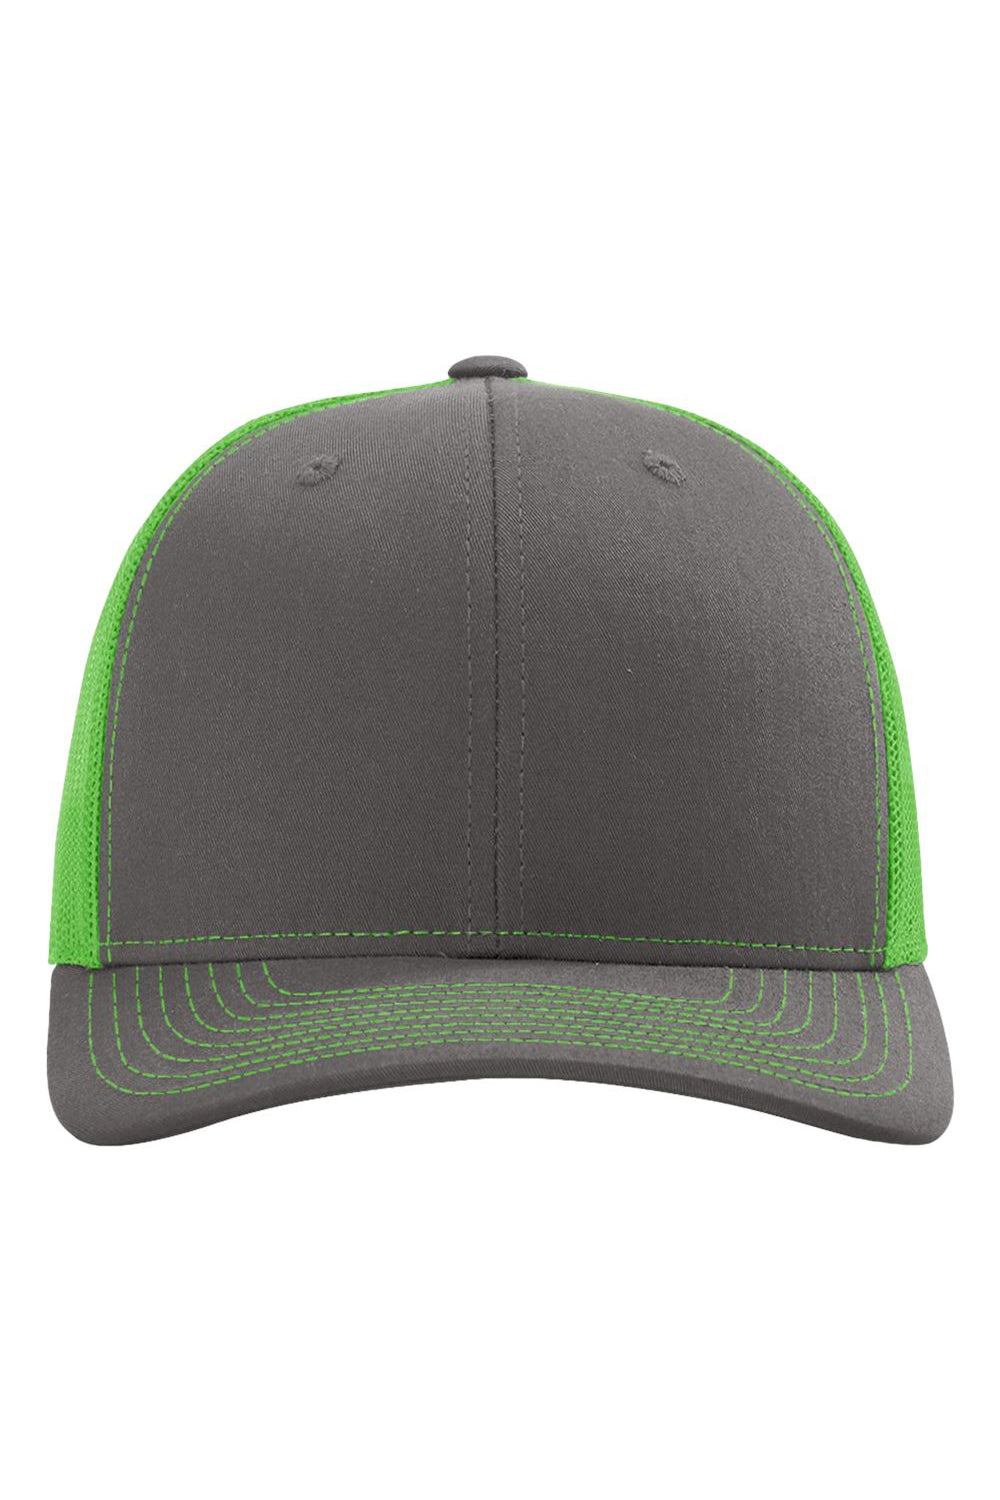 Richardson 112 Mens Snapback Trucker Hat Charcoal Grey/Neon Green Flat Front